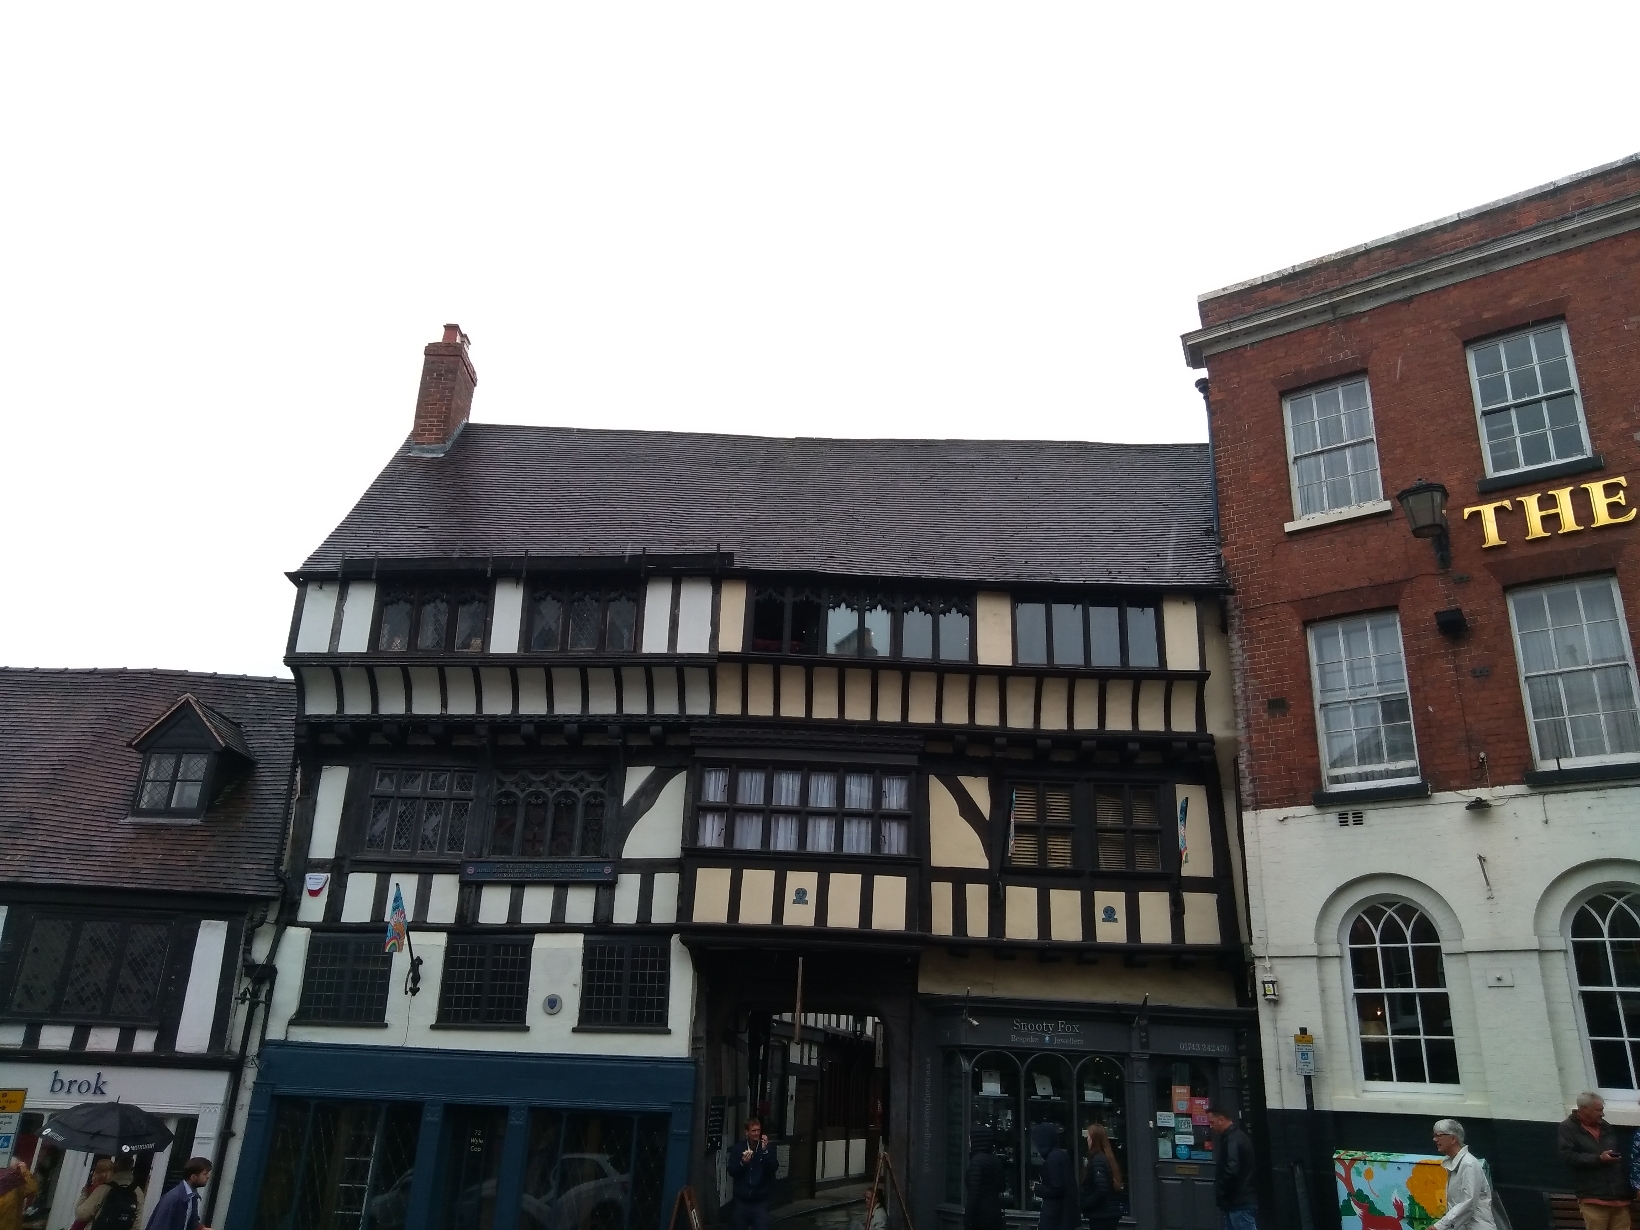 Shrewsbury - Wonky Medieval Shops